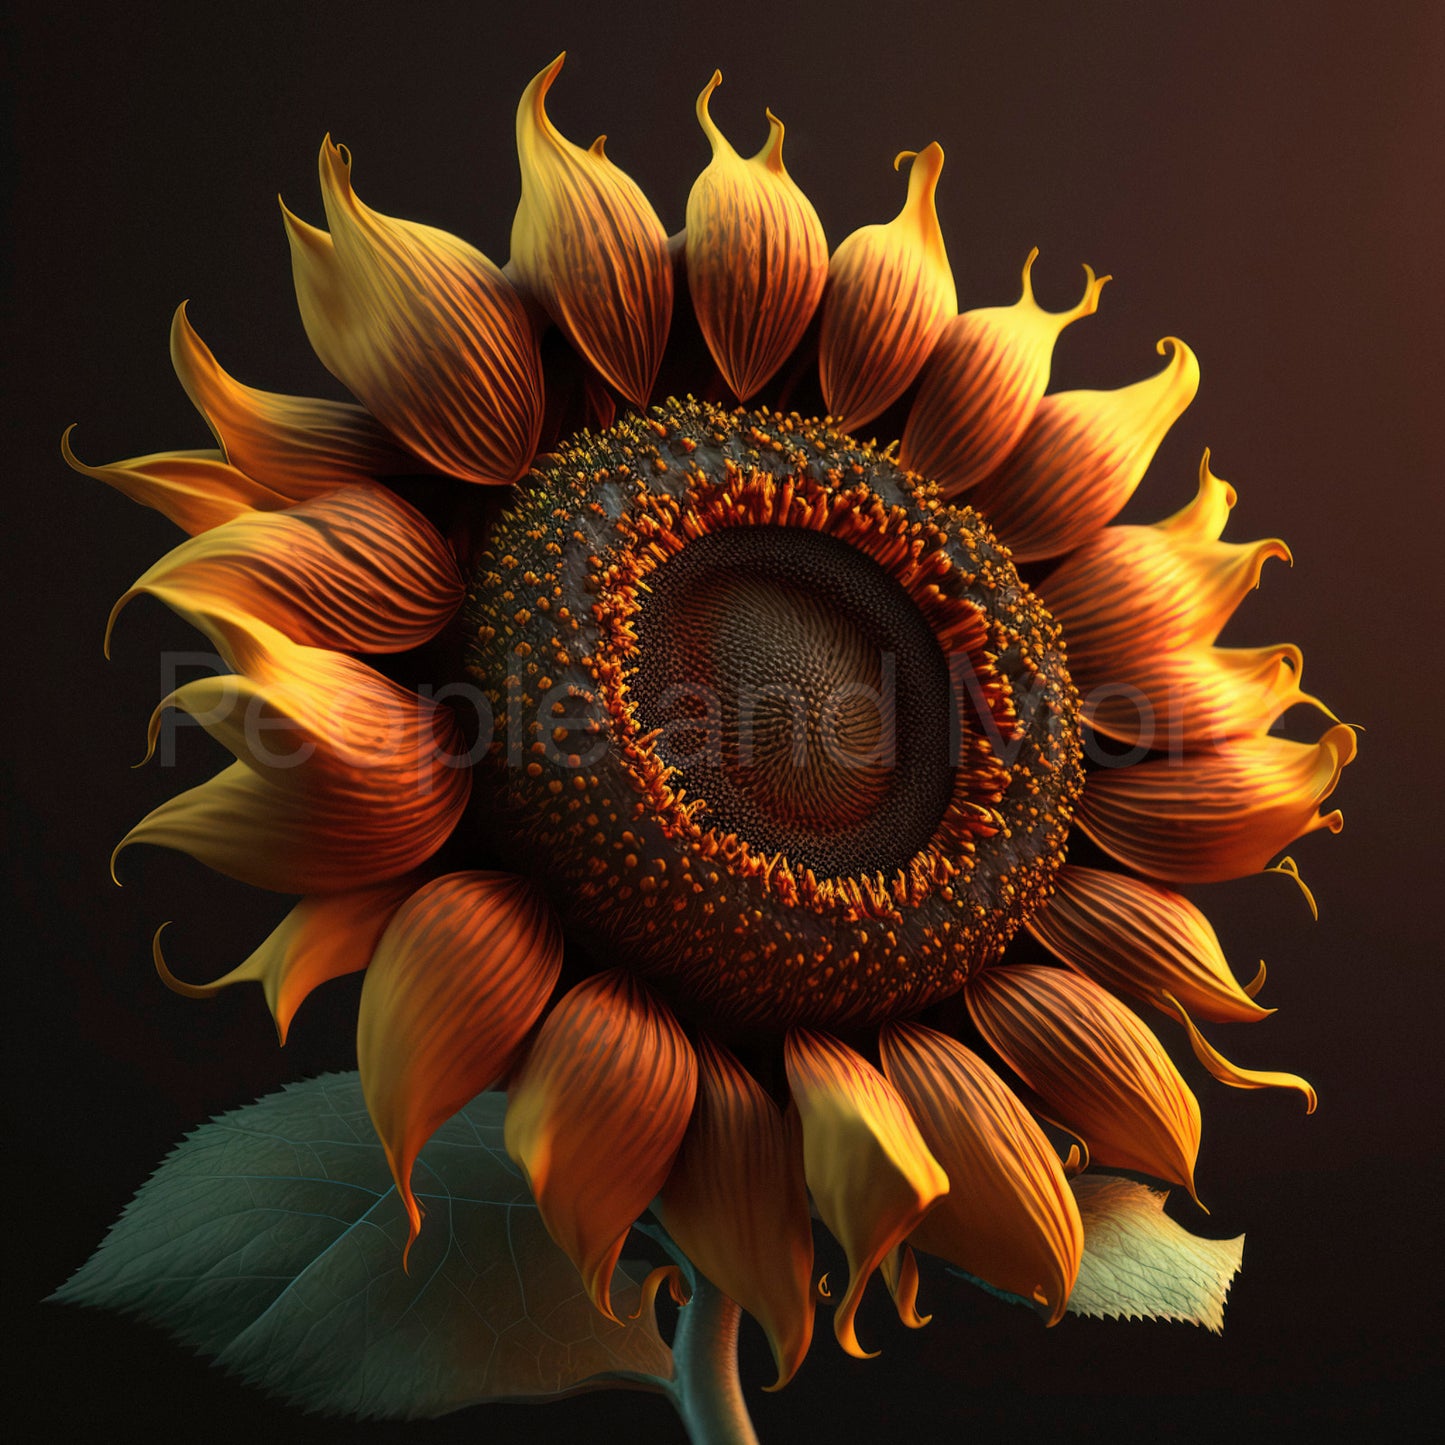 Digital Sunflower